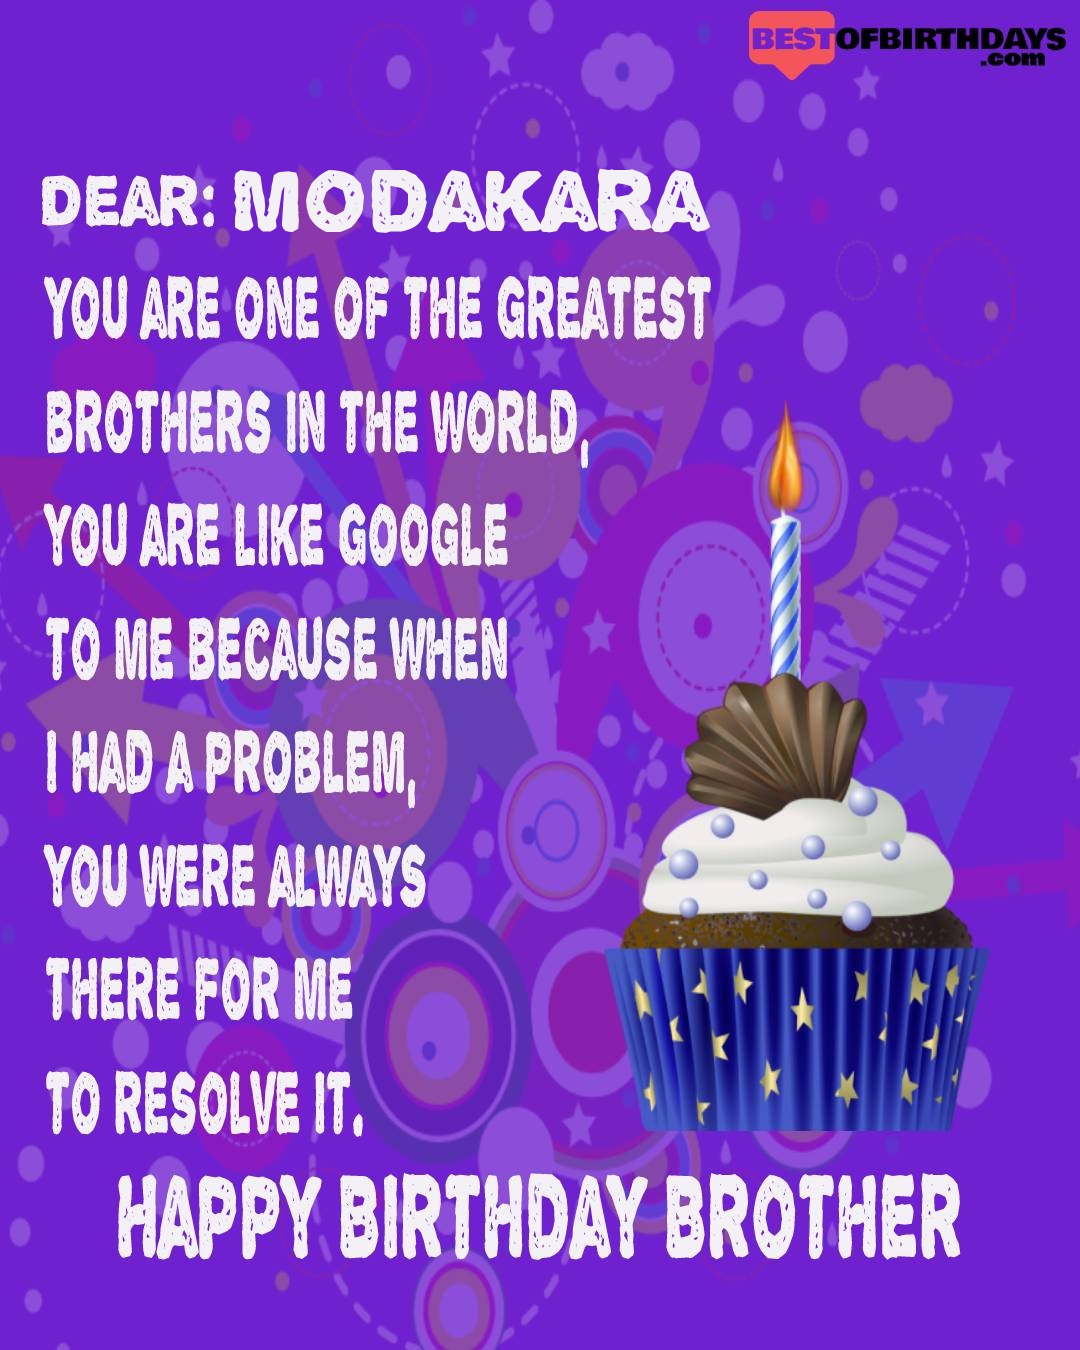 Happy birthday modakara bhai brother bro